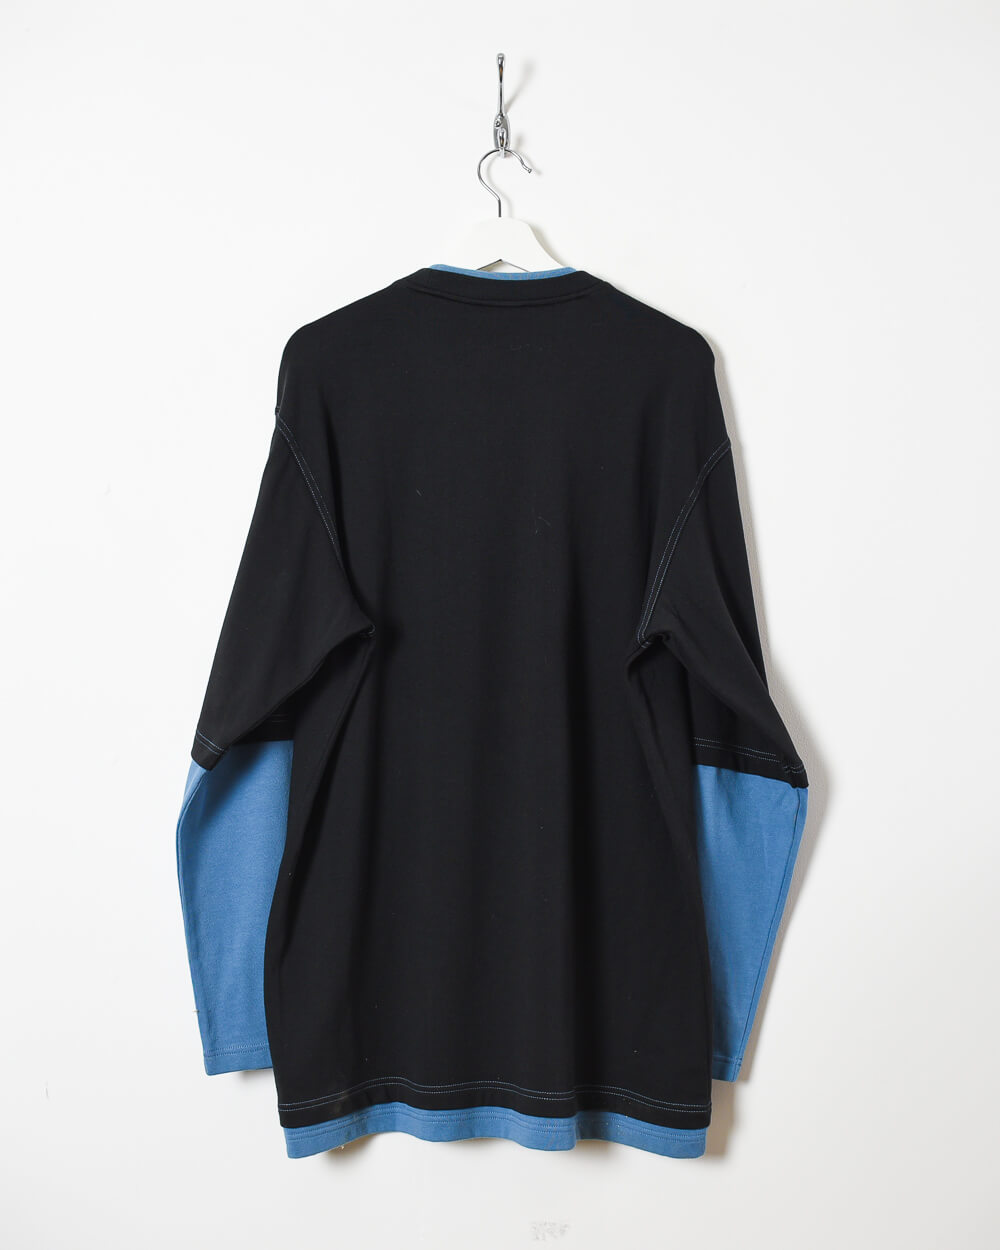 Black Adidas Long Sleeved T-Shirt - X-Large